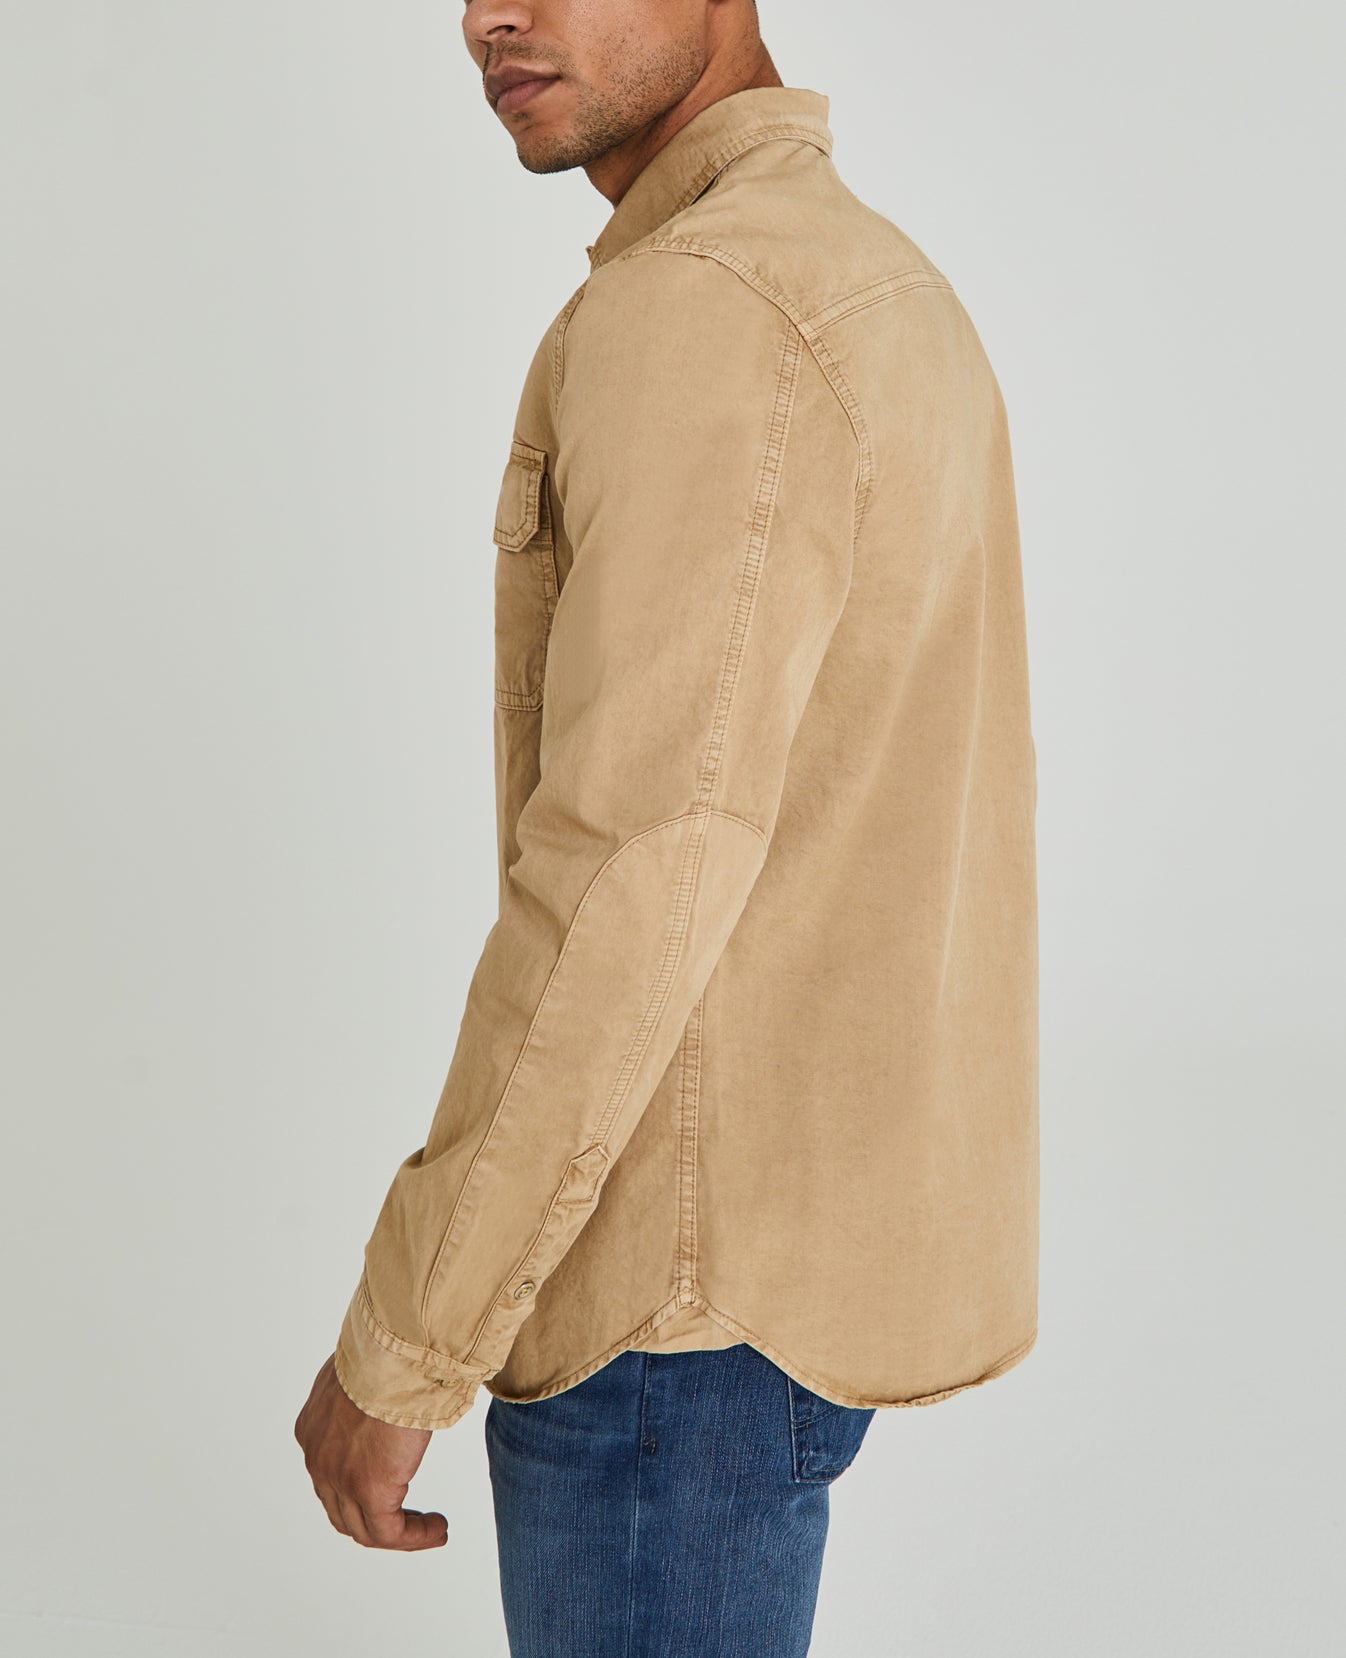 Benning Sleeve Patch Shirt Sulfur Sandy Pail Long Sleeve Shirt Men Tops Photo 6